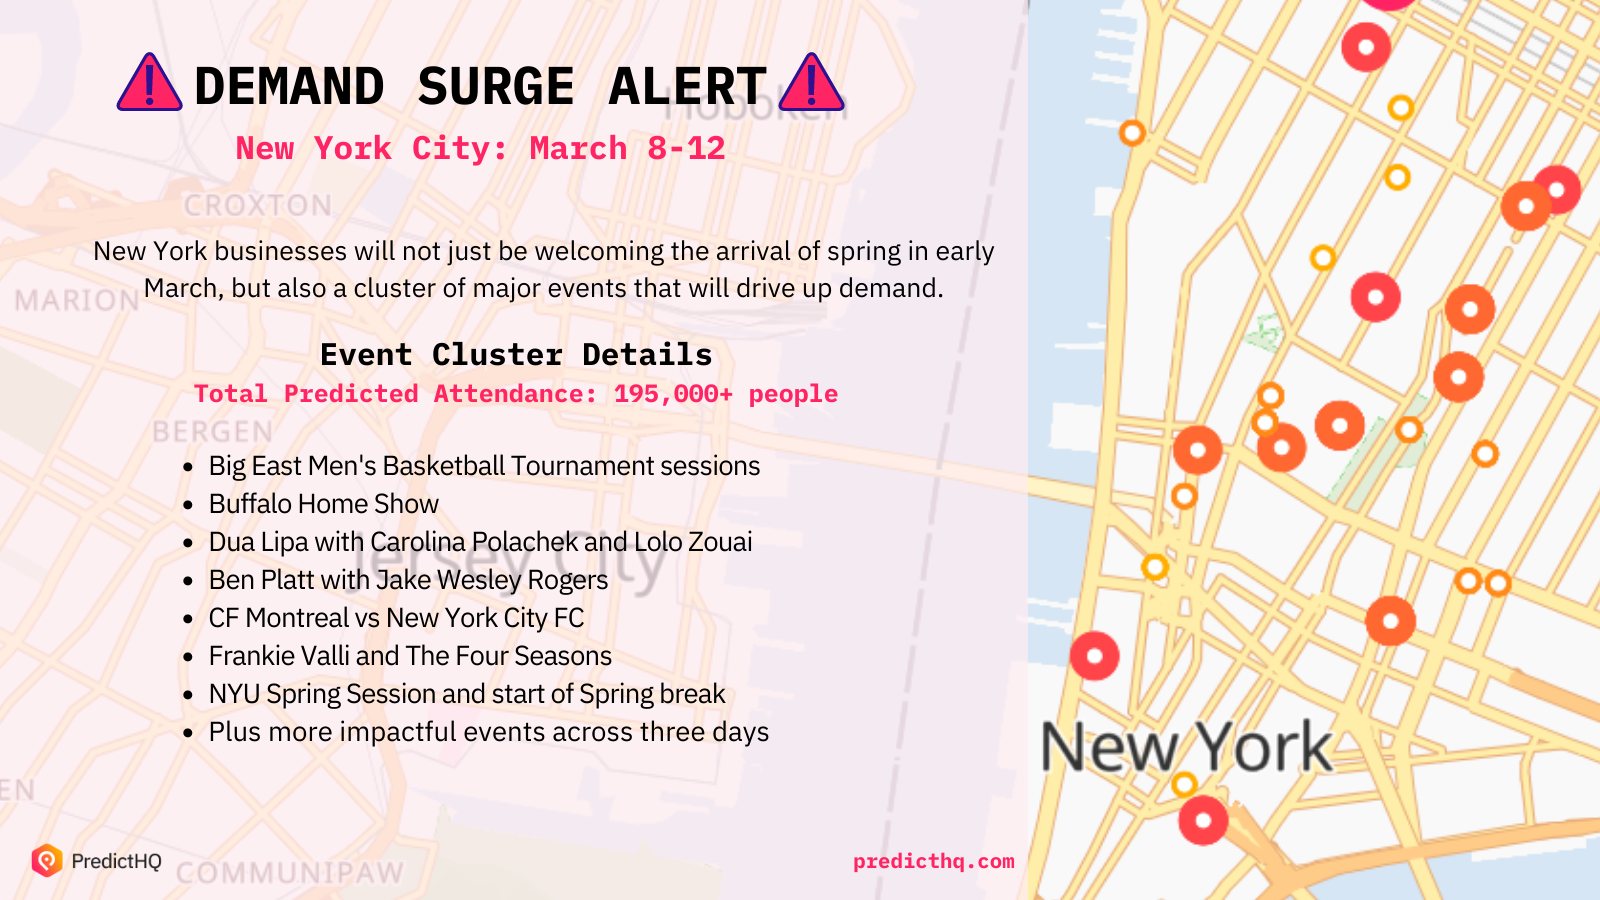 blog image - demand surge alert new york city